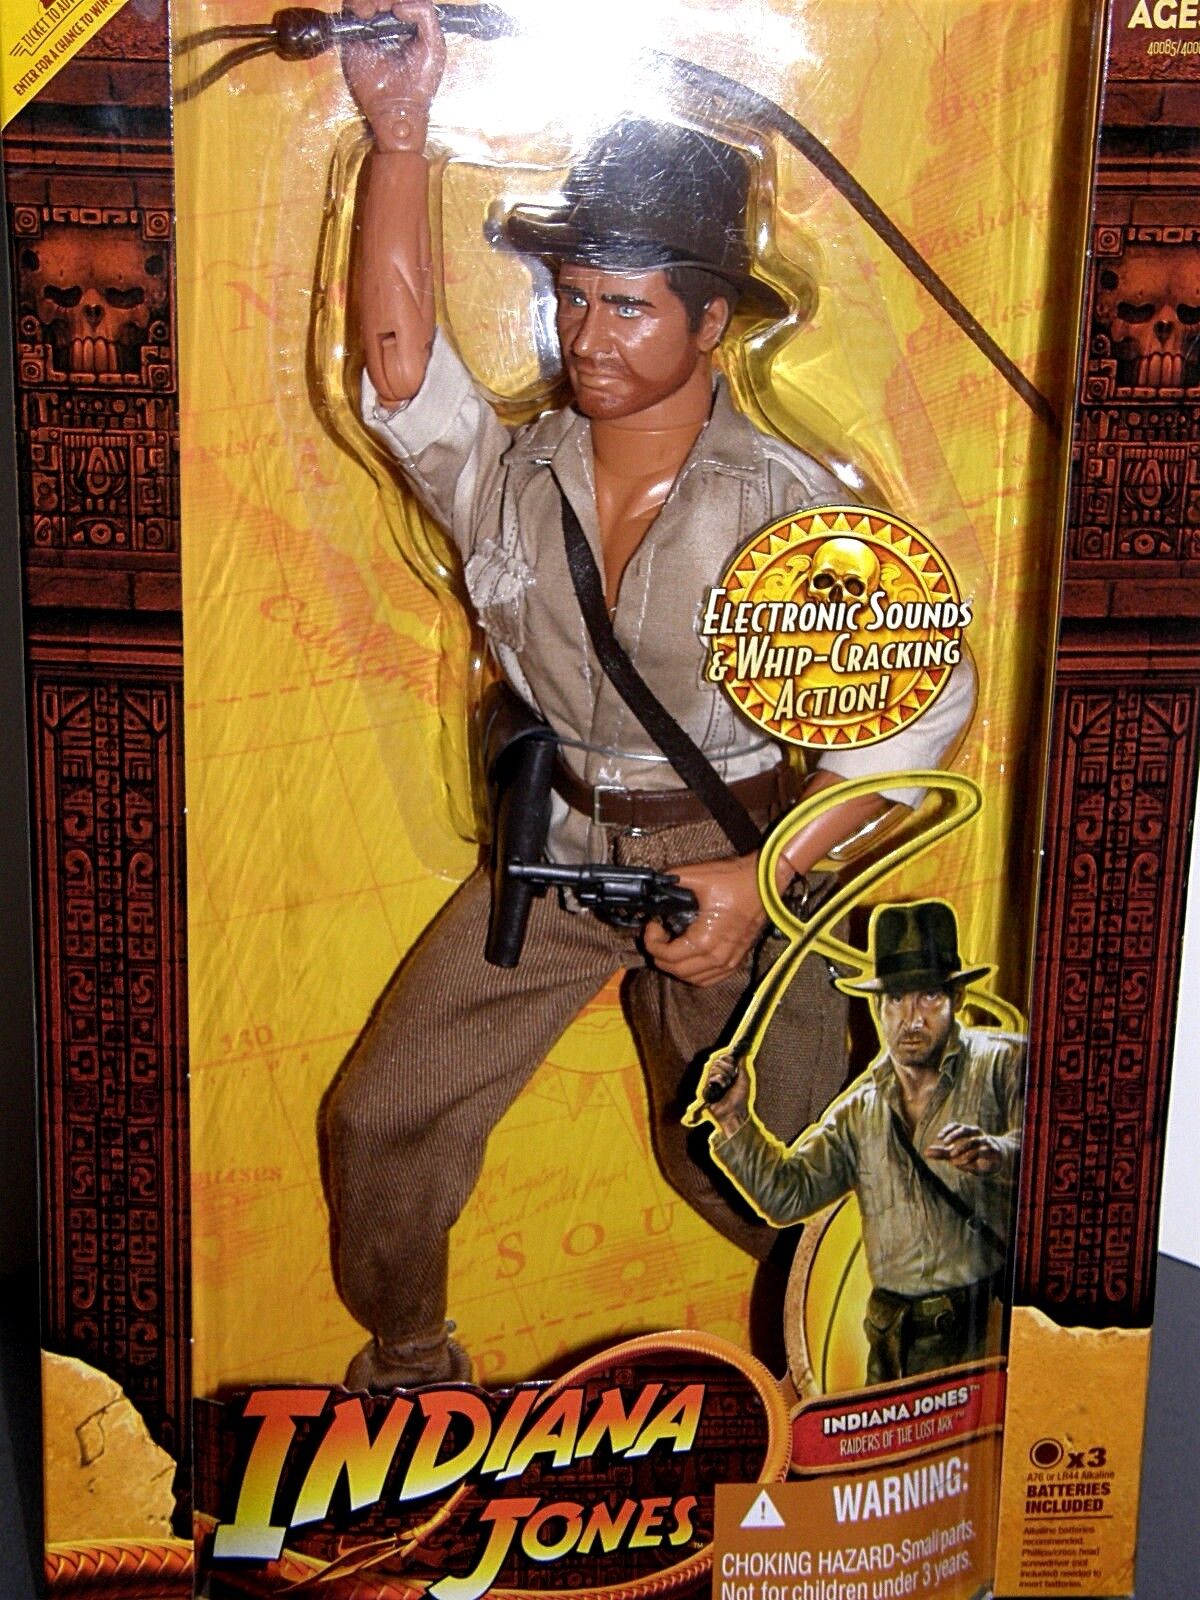  Raiders of the lost Ark  Indiana Jones    2008 collector  action figure  